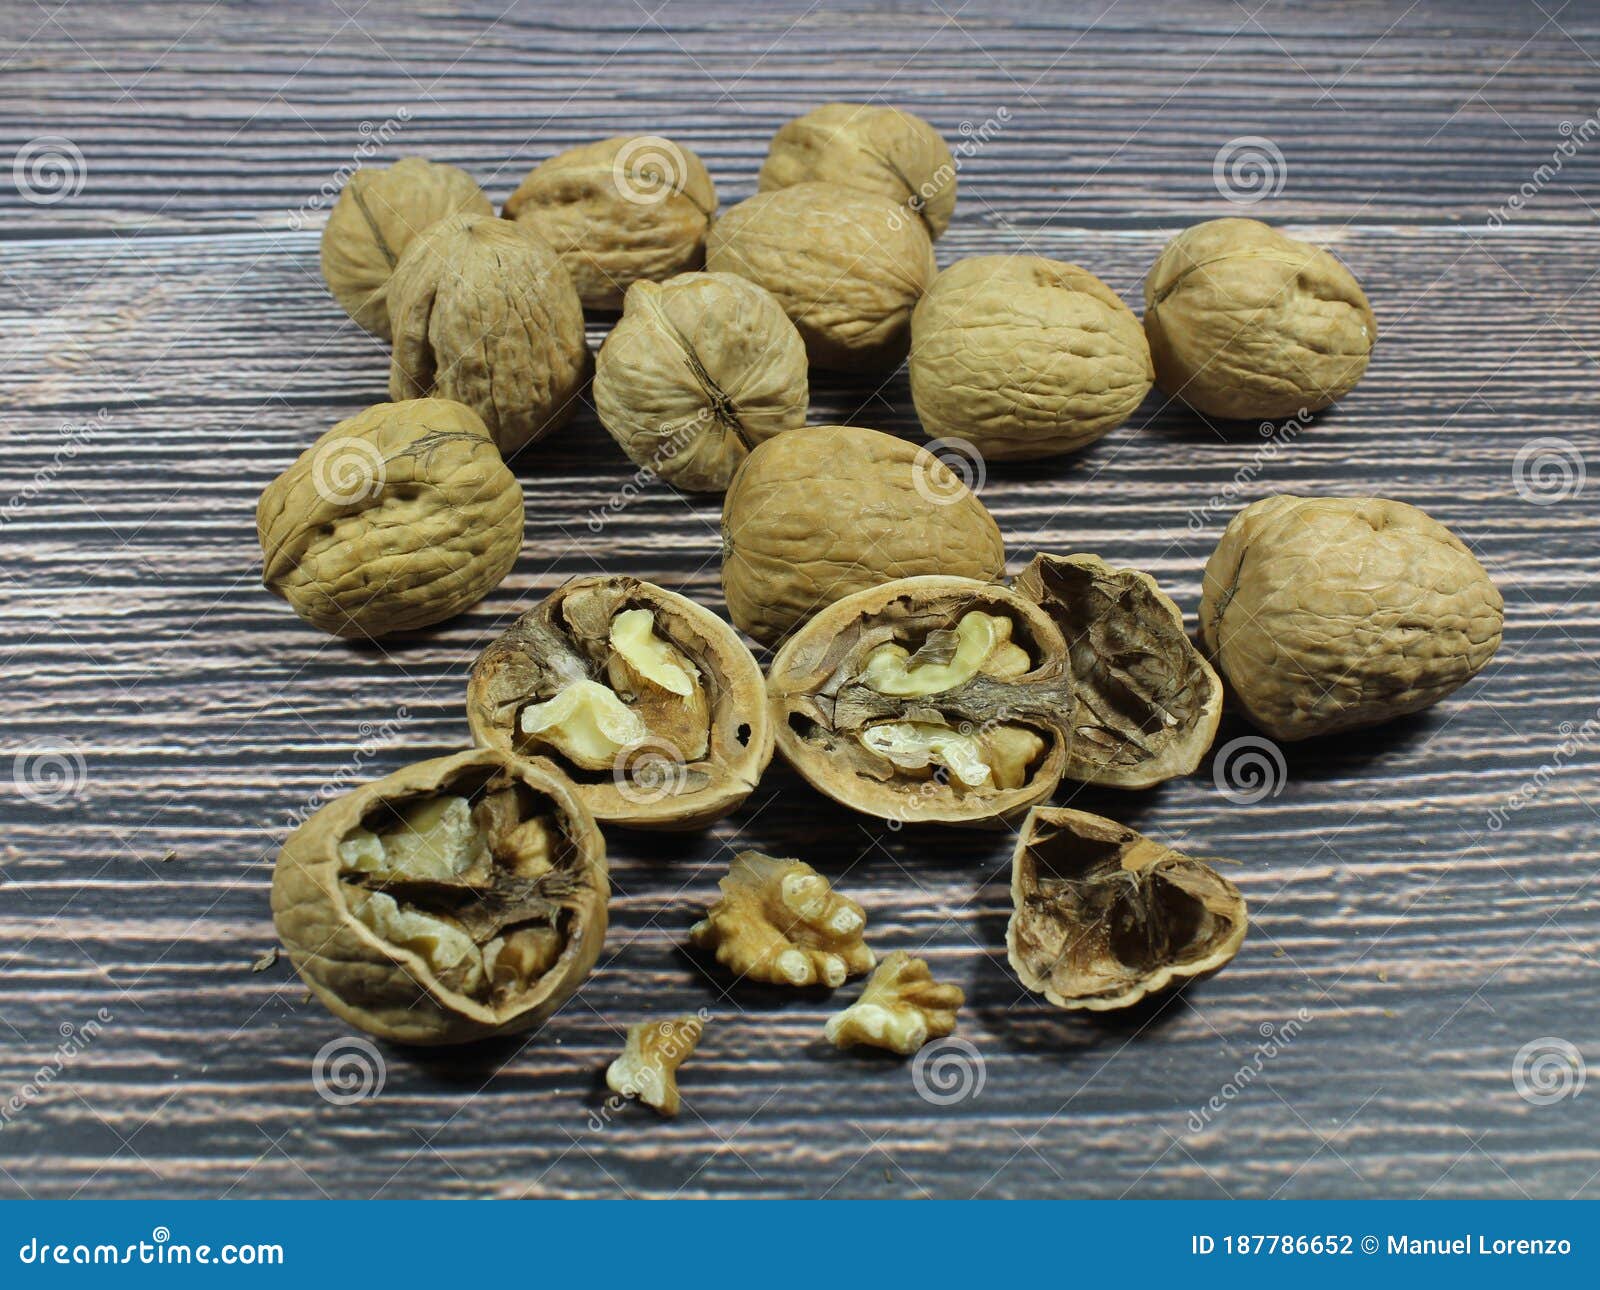 nut fruit dried fiber natural fiber walnut shell health good seed